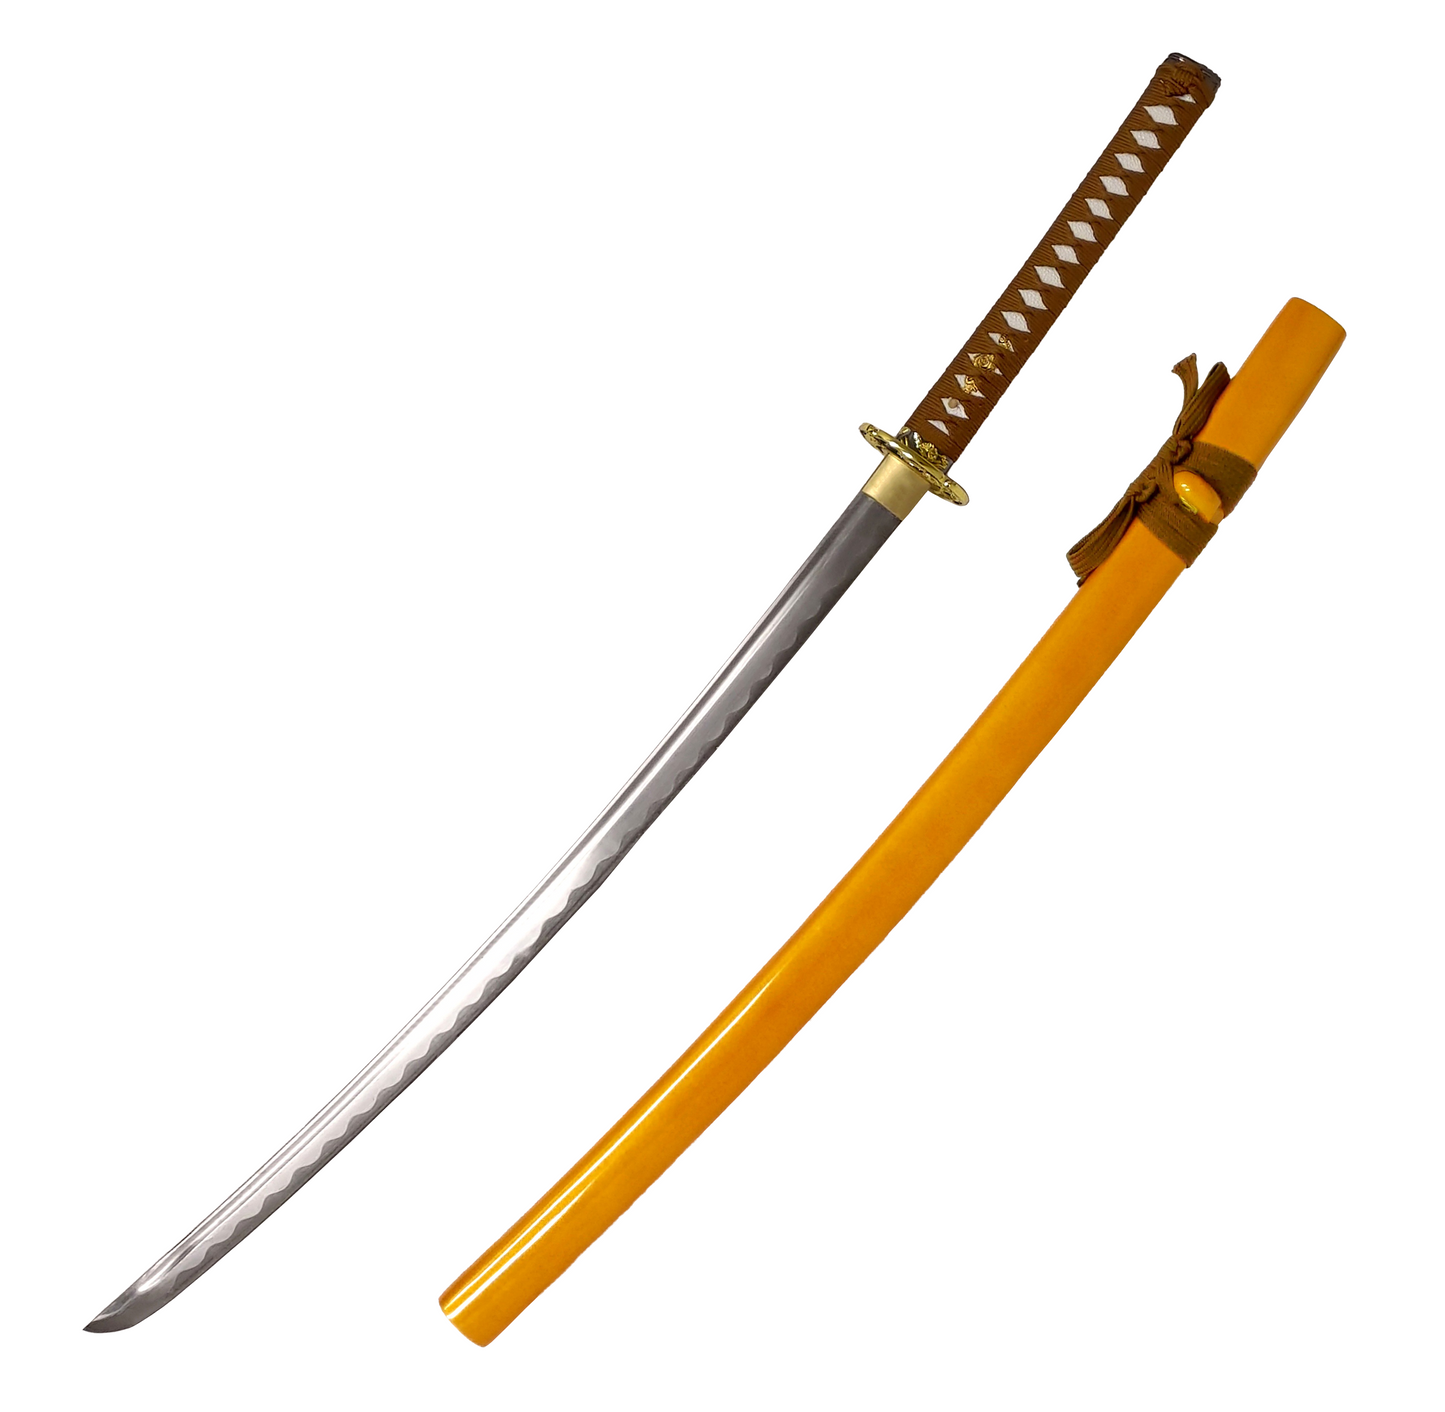 GOLD DRAGON KATANA FULL TANG JAPANESE CARBON STEEL SAMURAI SWORD